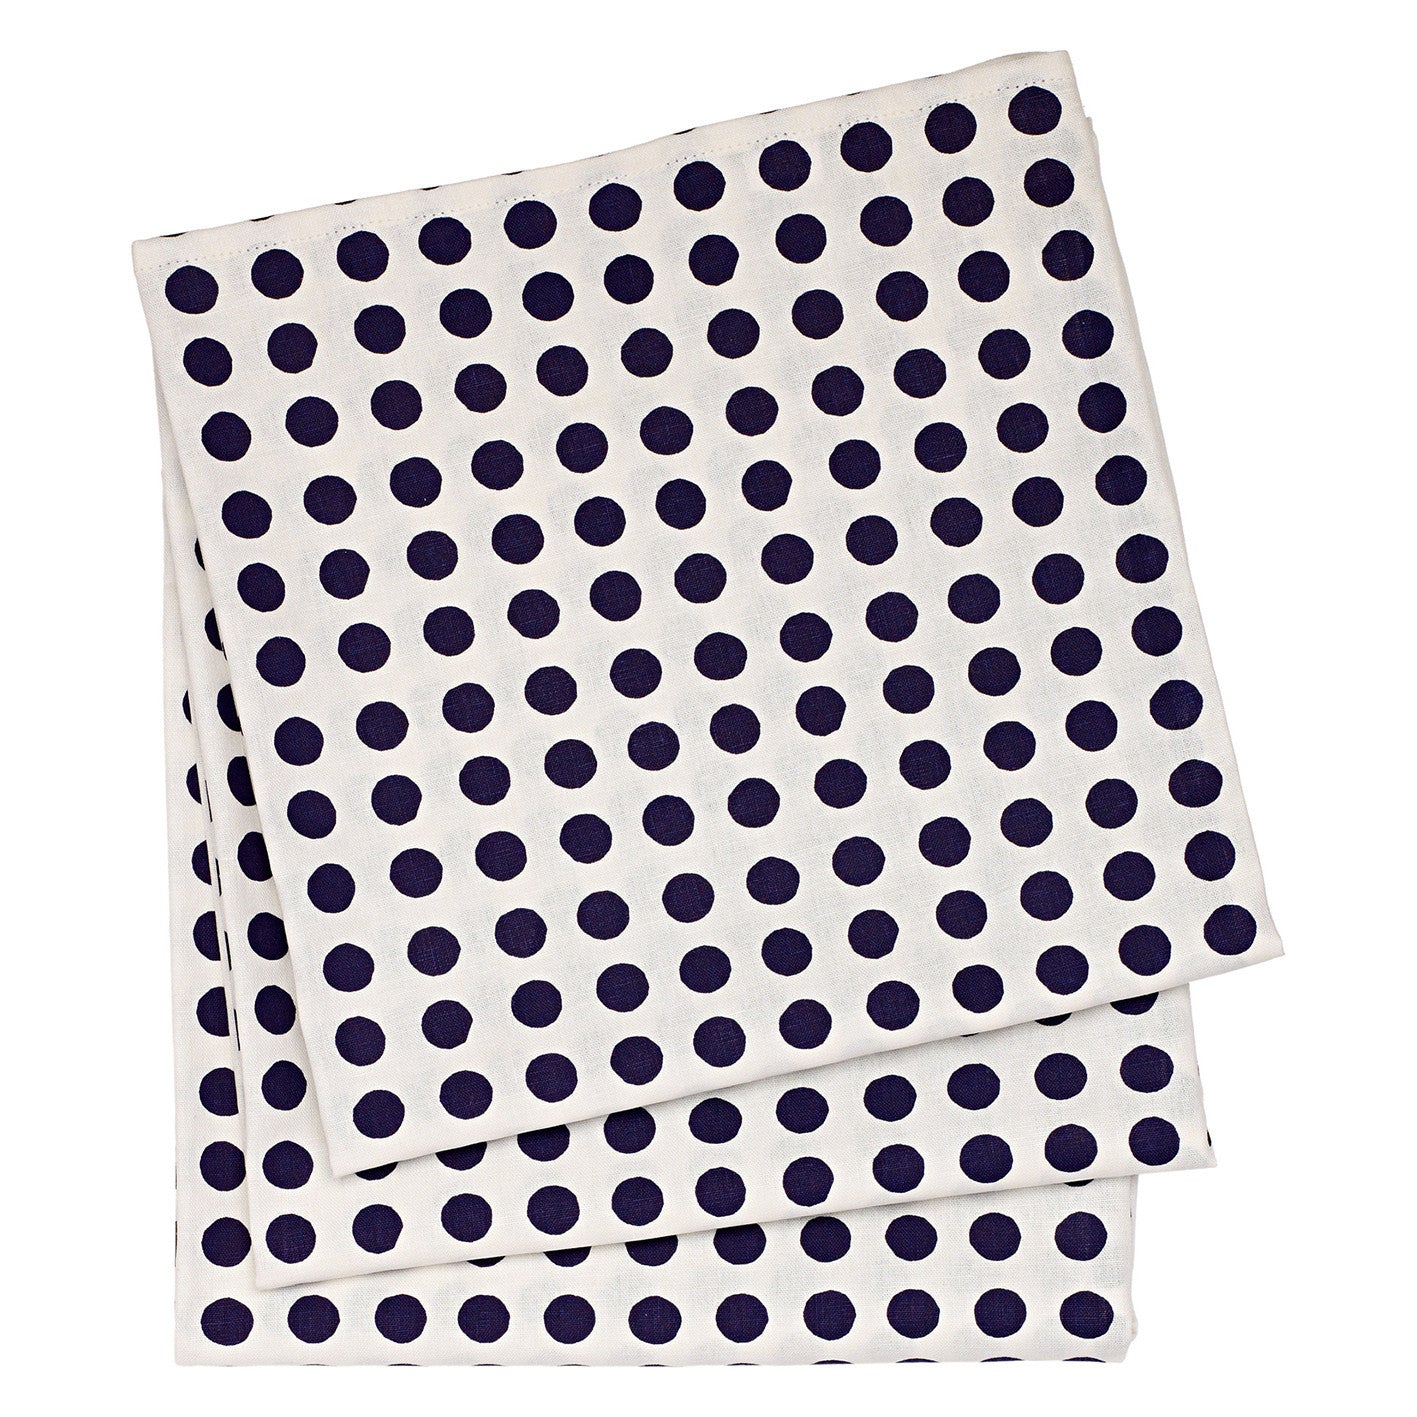 London Polka Dot Linen Tablecloth in Dark Aubergine Purple